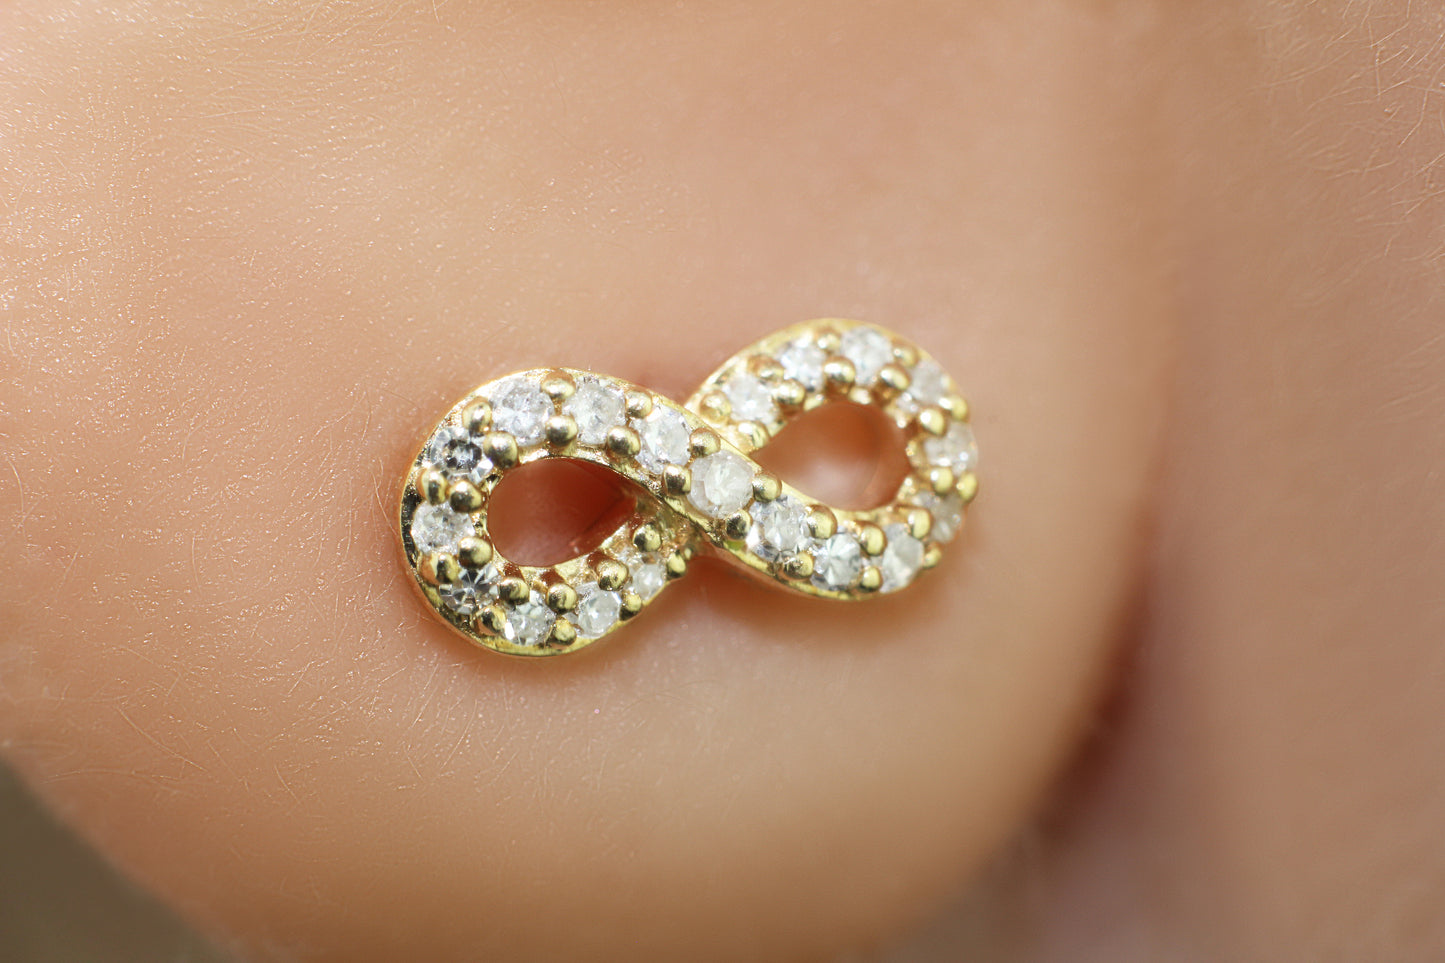 Belantina Diamond Petite Edit Infinity Earrings